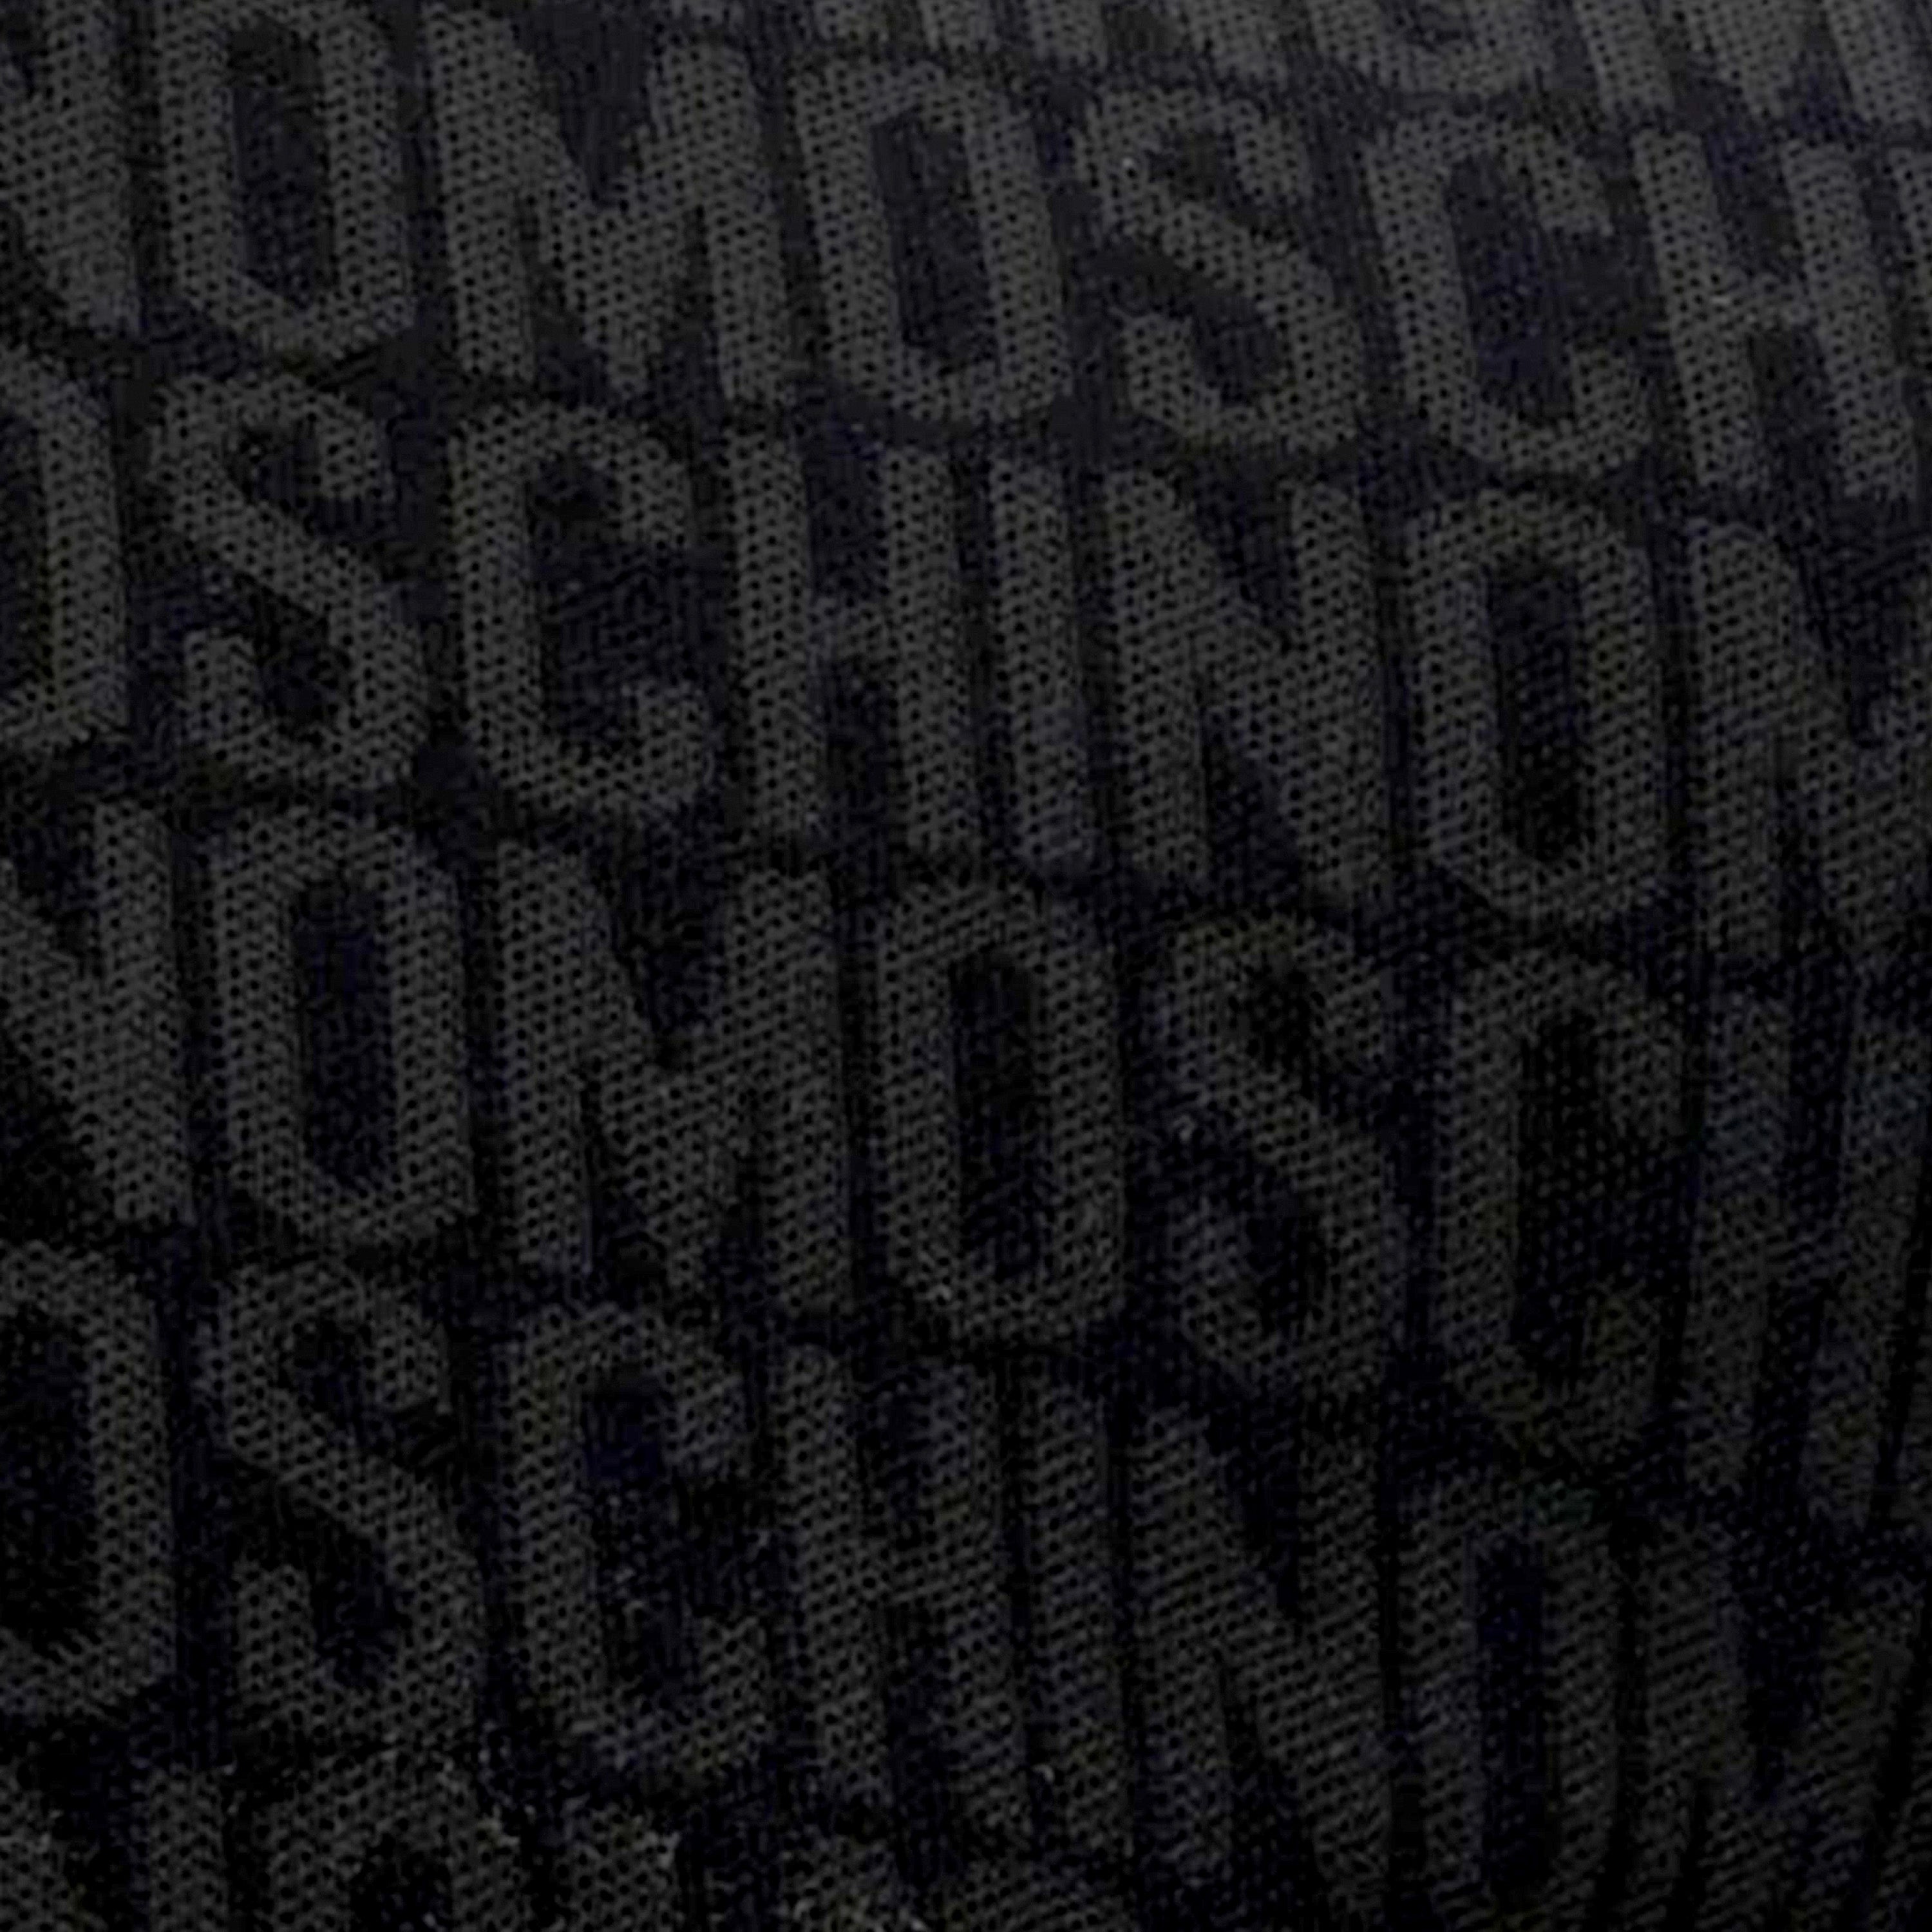 Camiseta Negra Moschino Couture Monogram